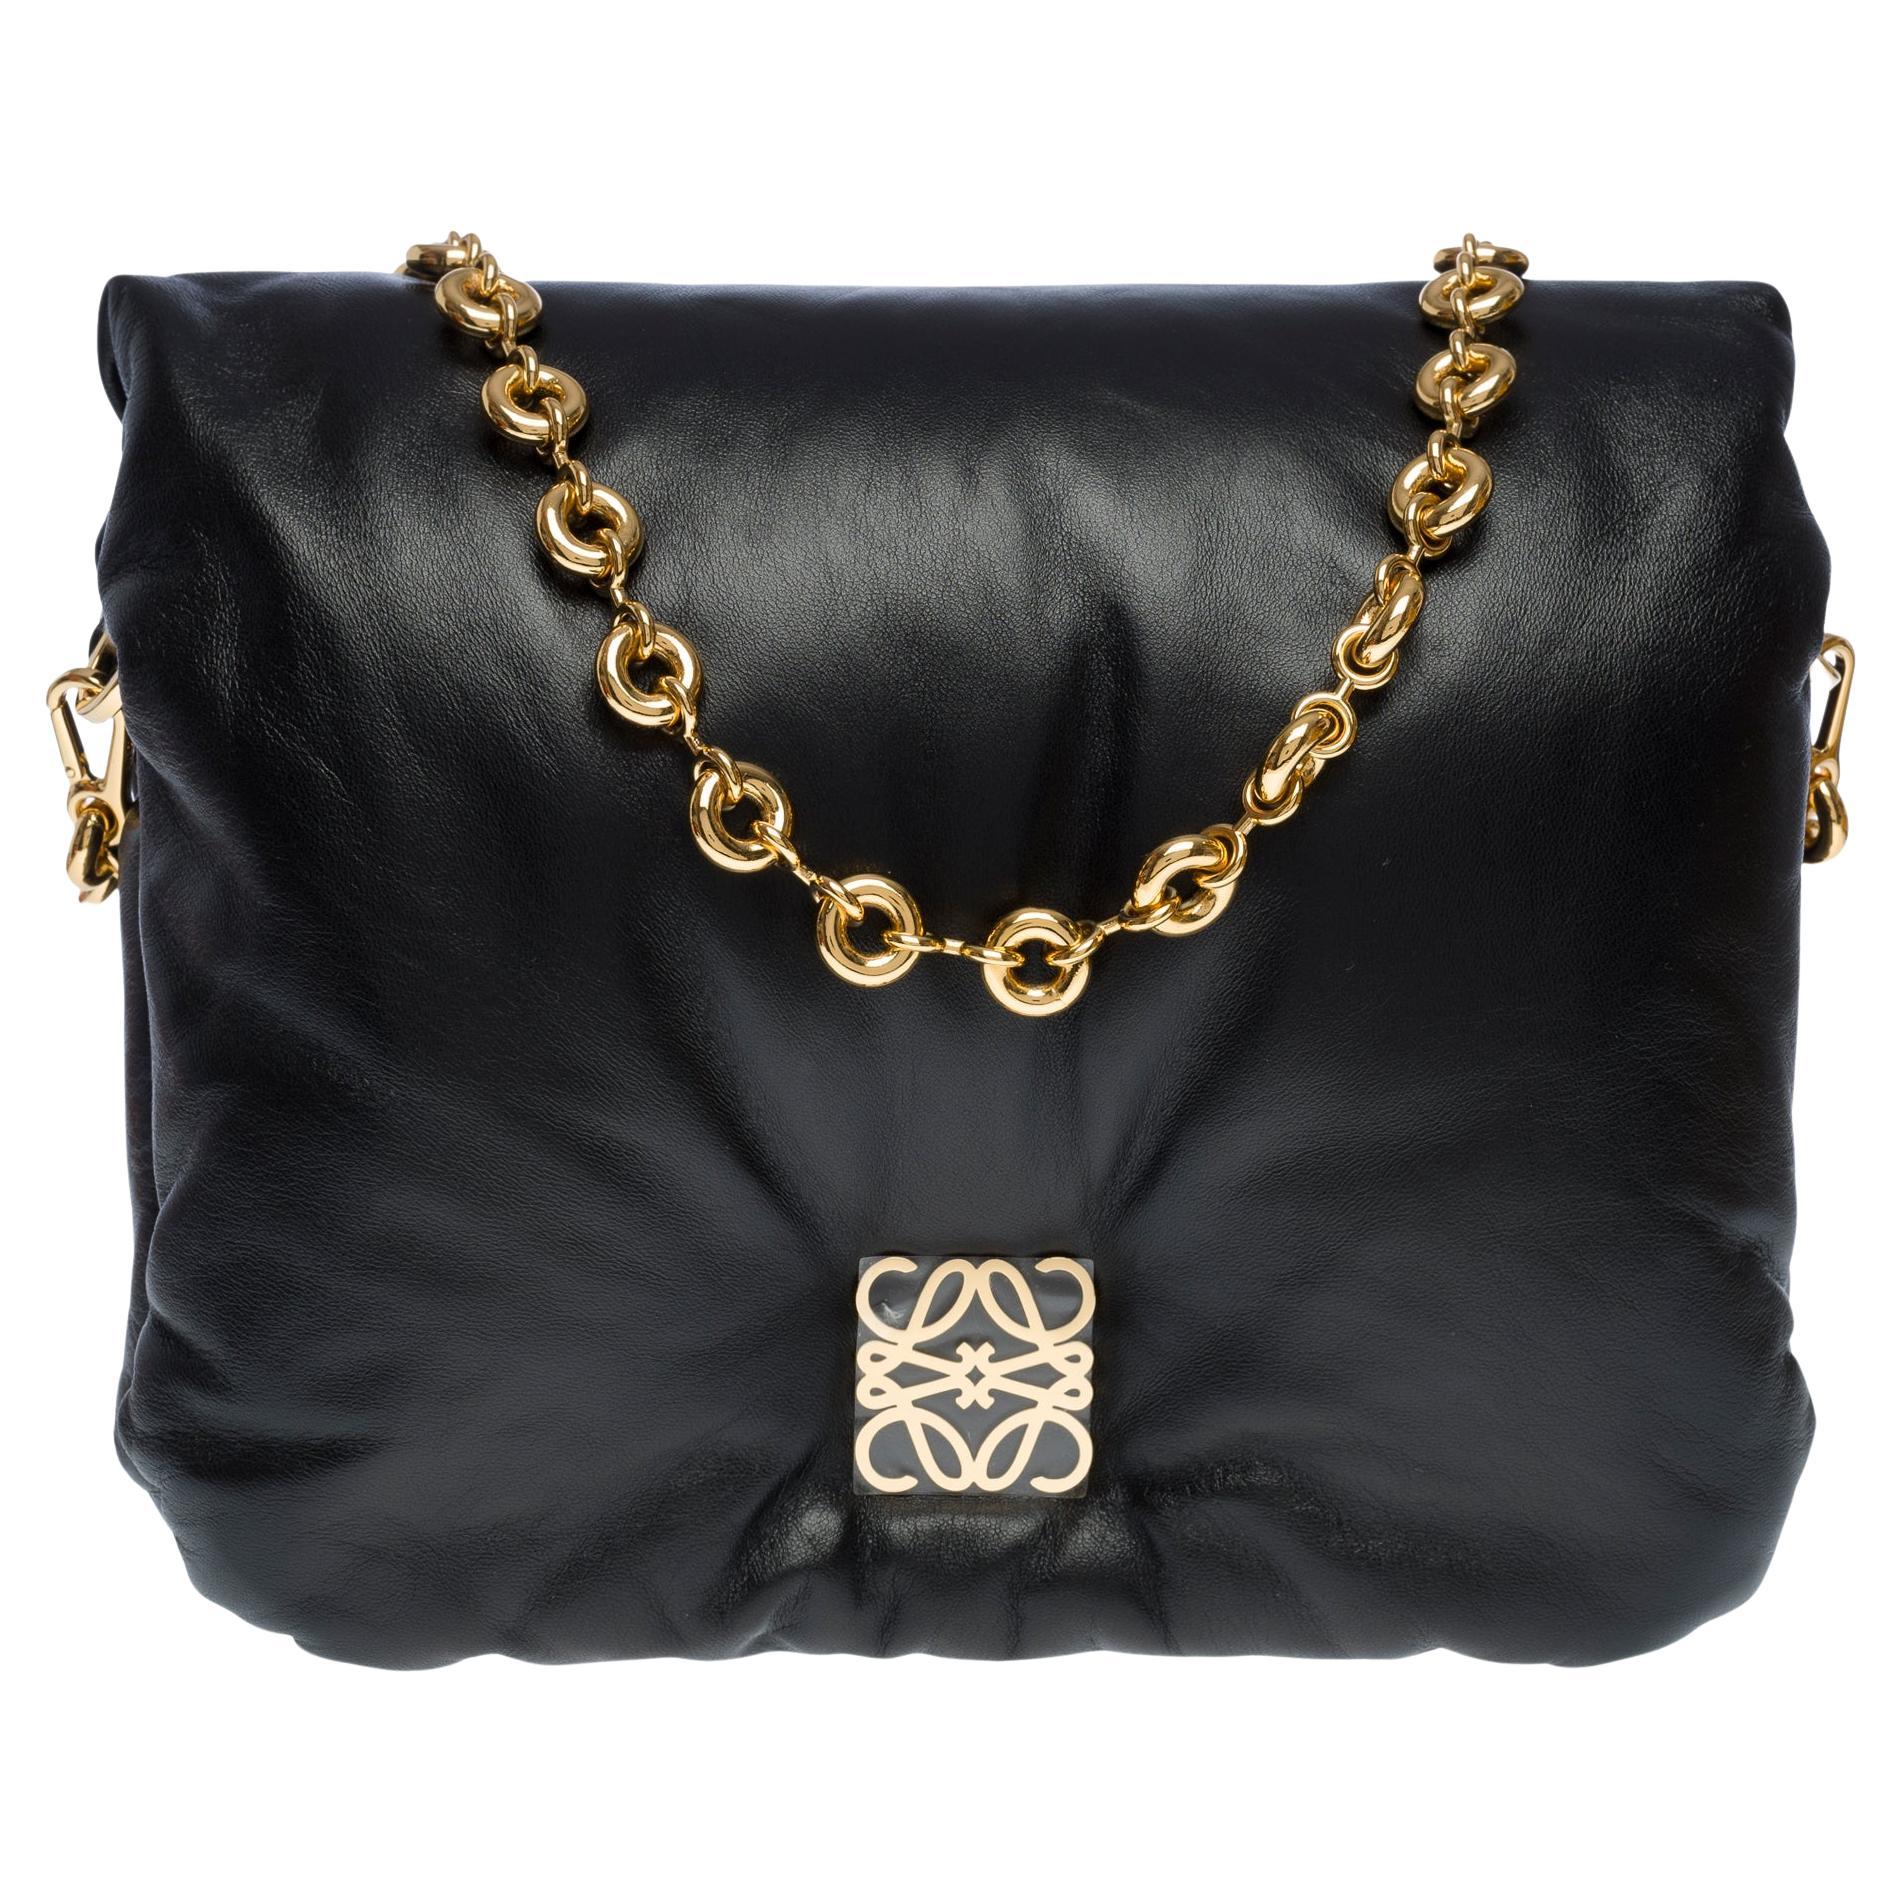 New Loewe Goya Puffer shoulder bag in black shiny lambskin leather, GHW